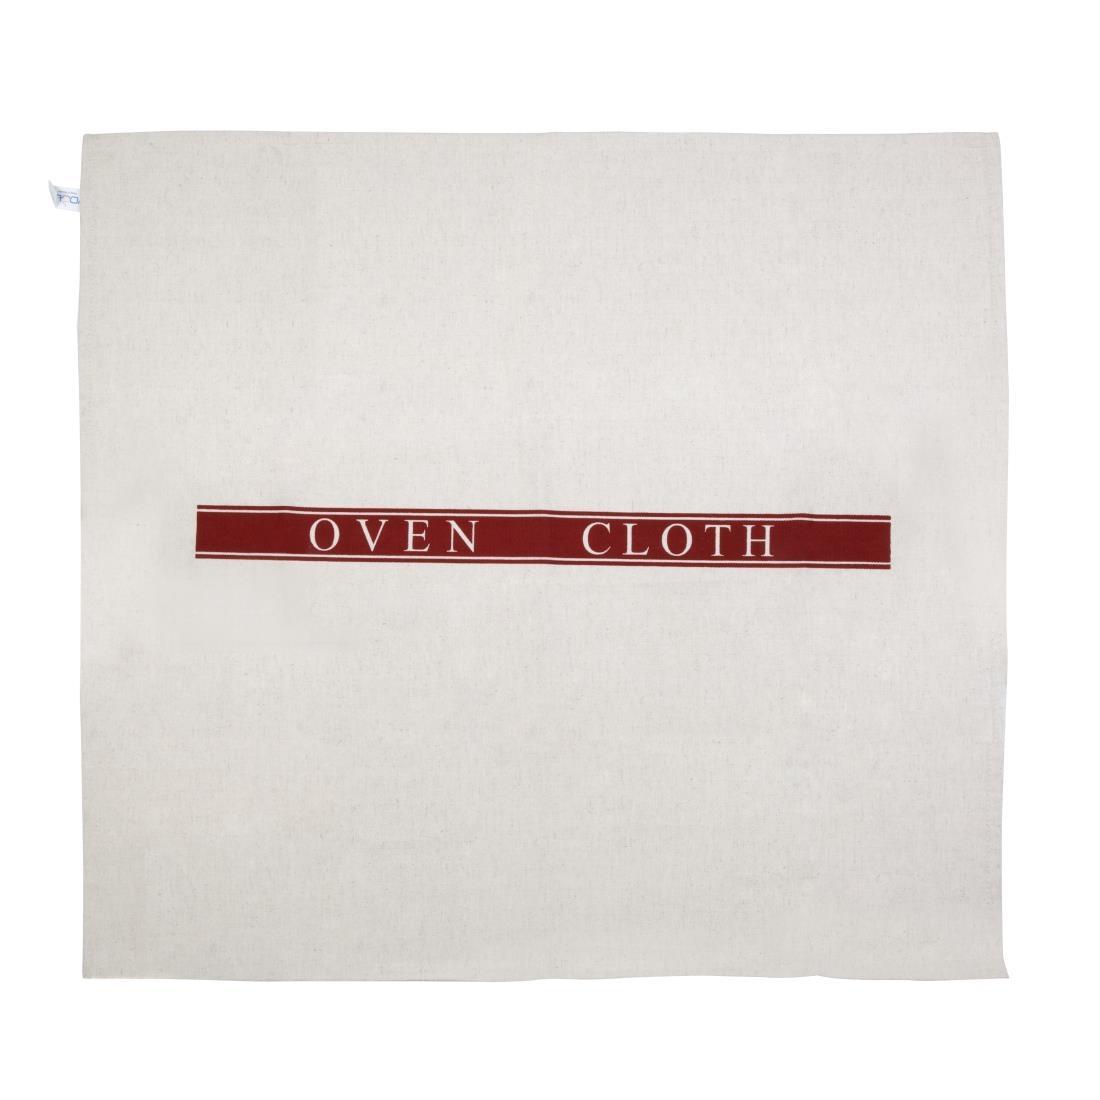 Vogue Hotel Oven Cloth - E933  - 1